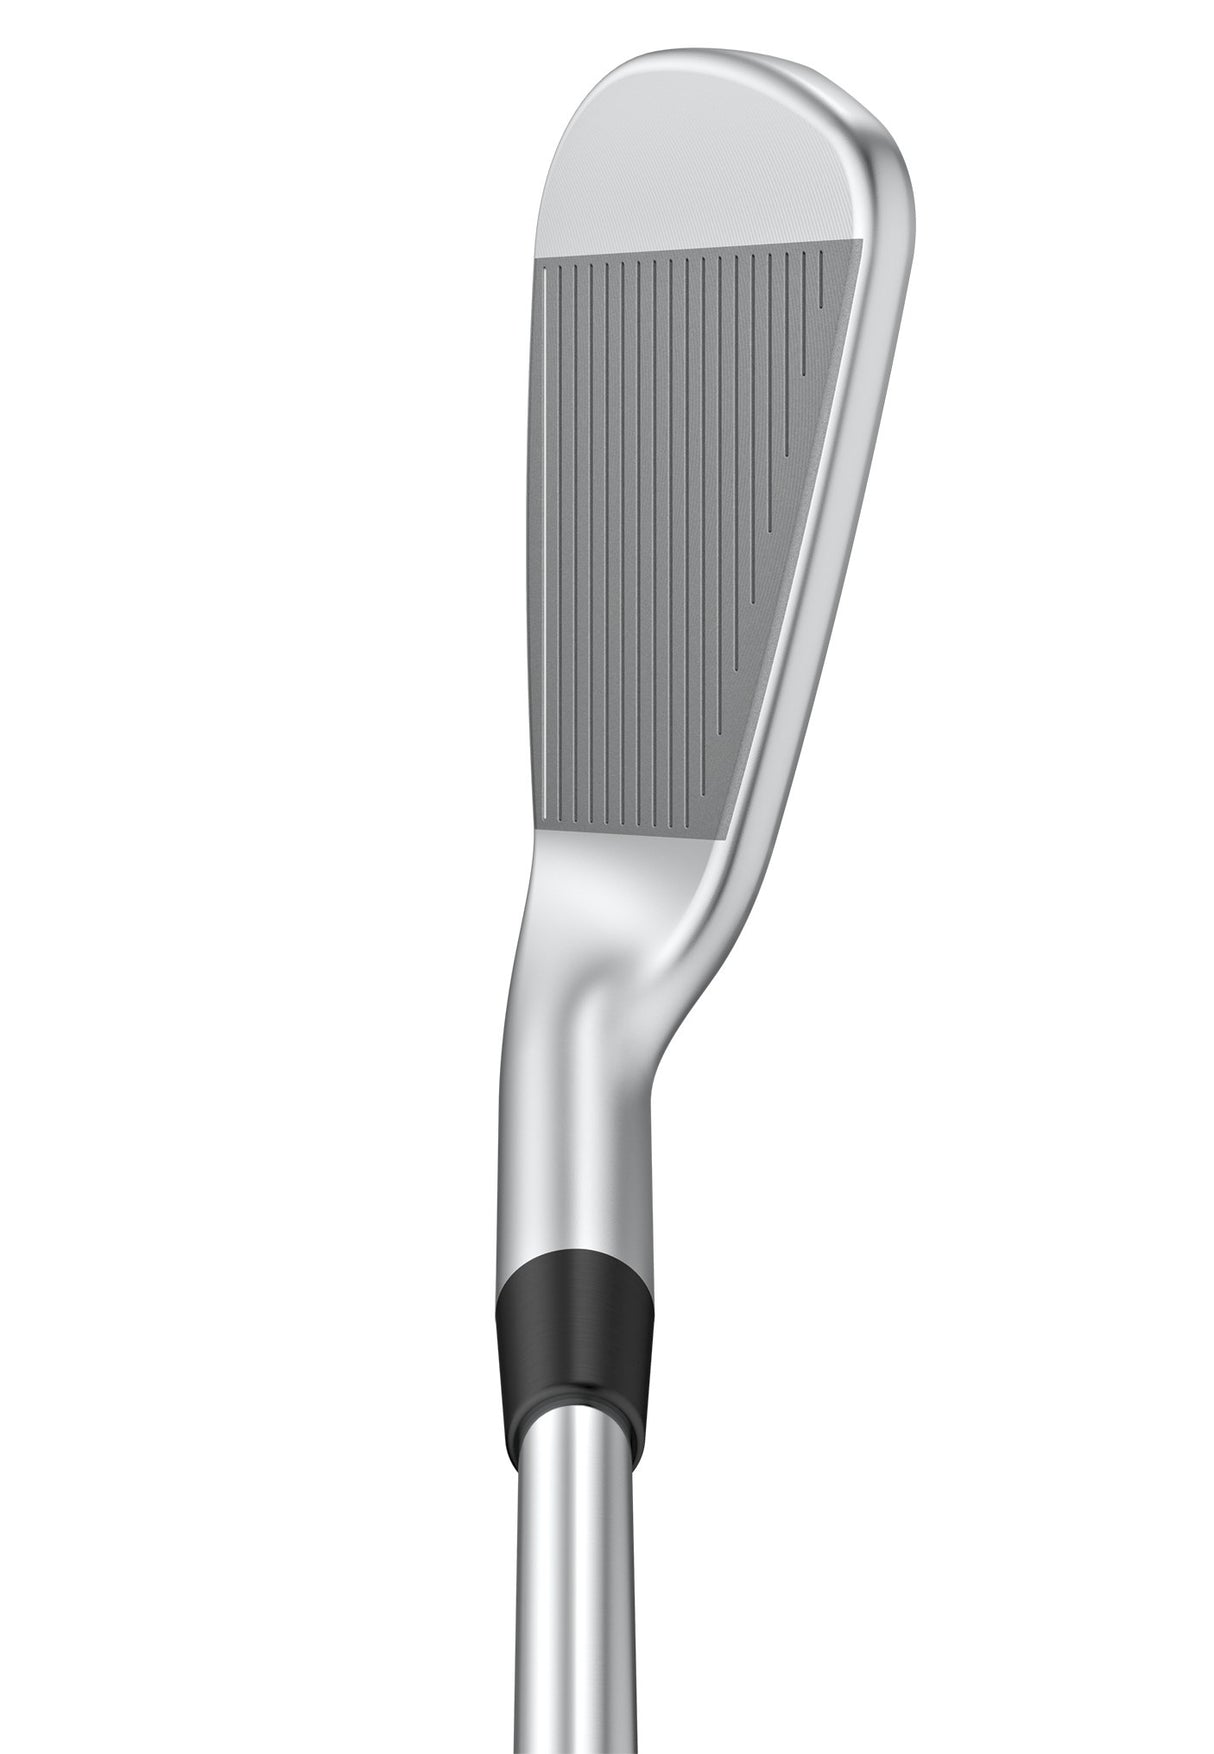 PING i230 Iron Set with Steel Shafts - Niagara Golf Warehouse PING Iron Sets